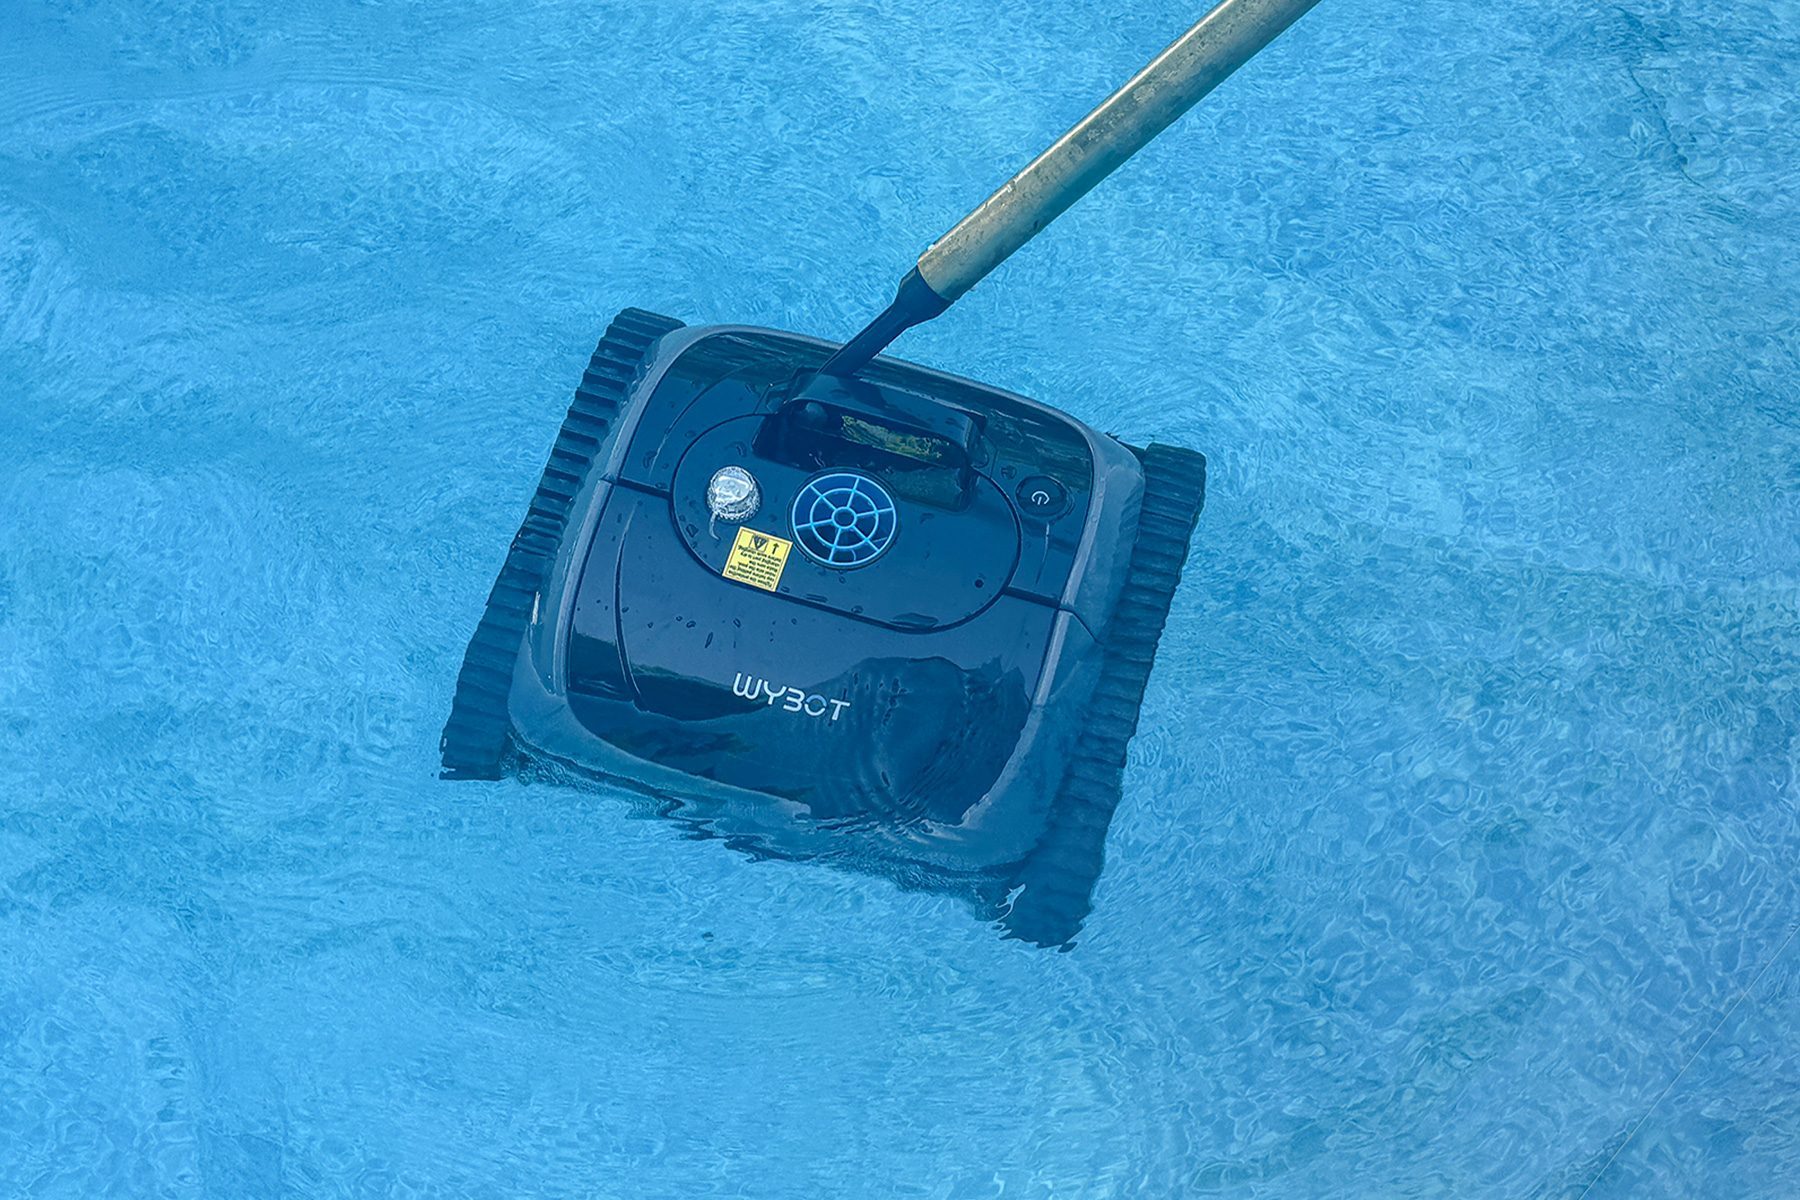 Wybot C1 Robotic Pool Cleaner under water